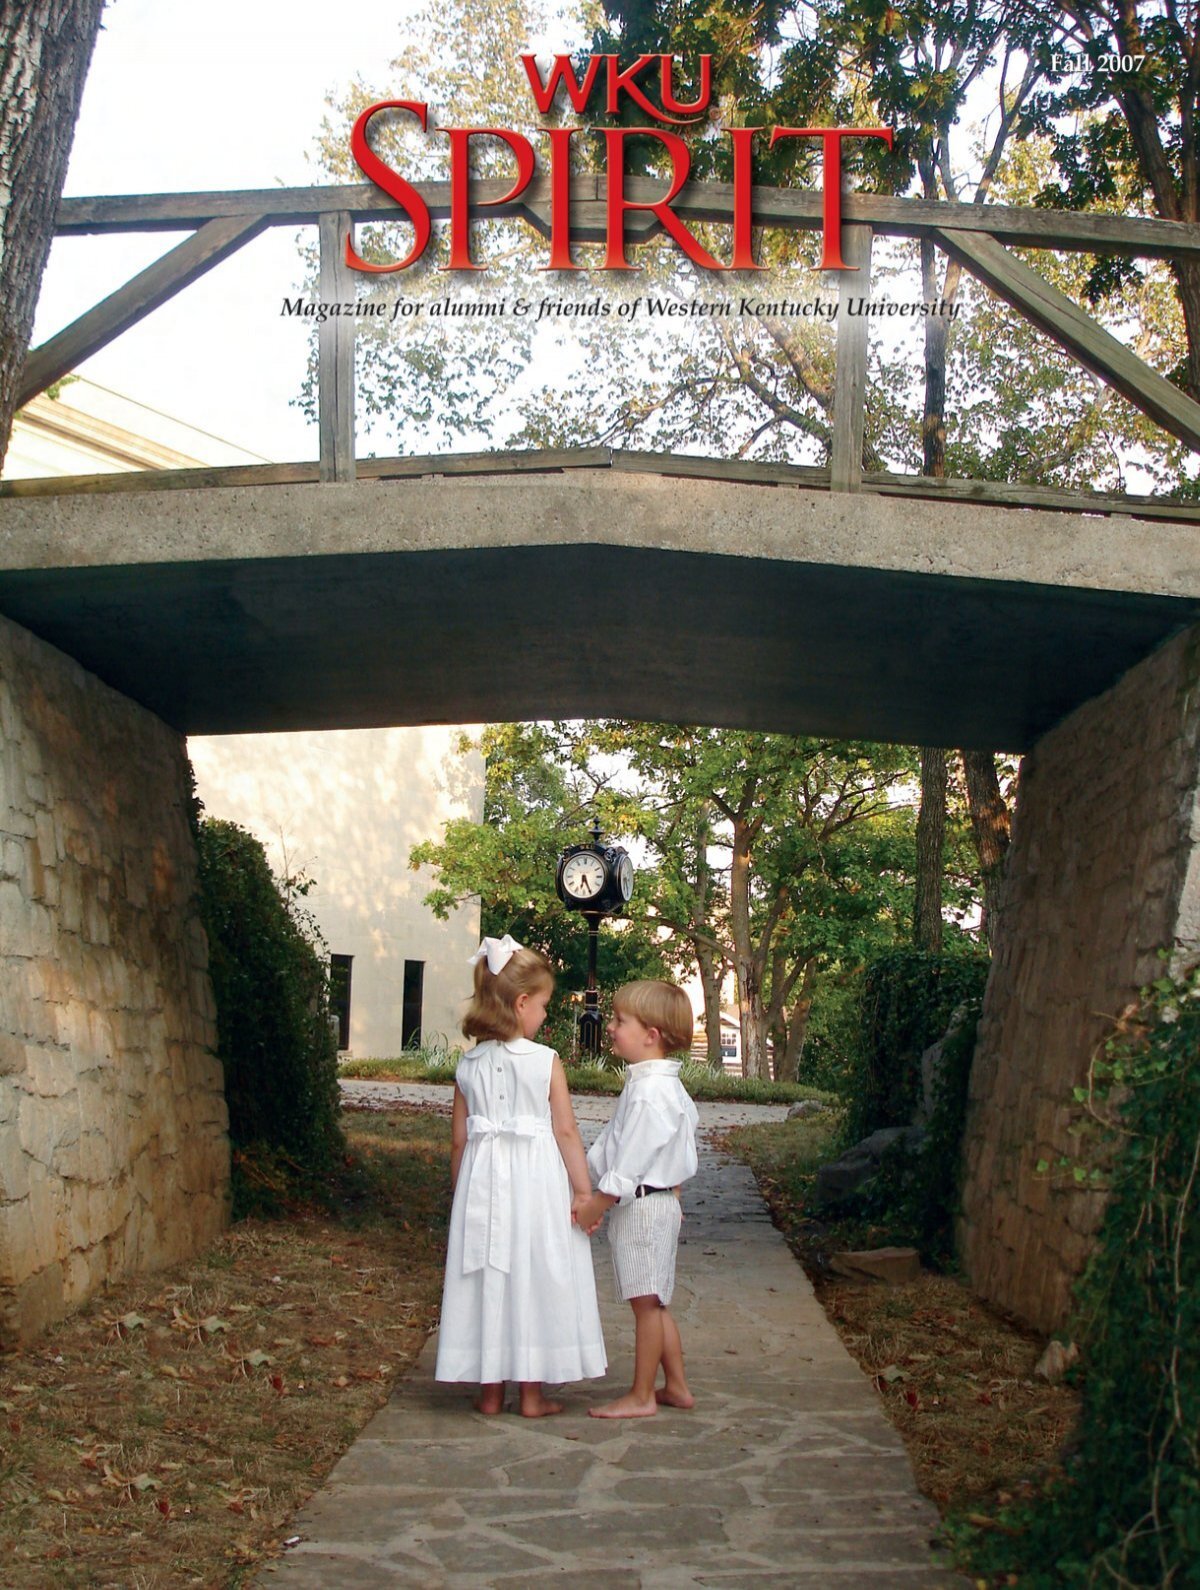 Fall 2007 Covers - iamWKU